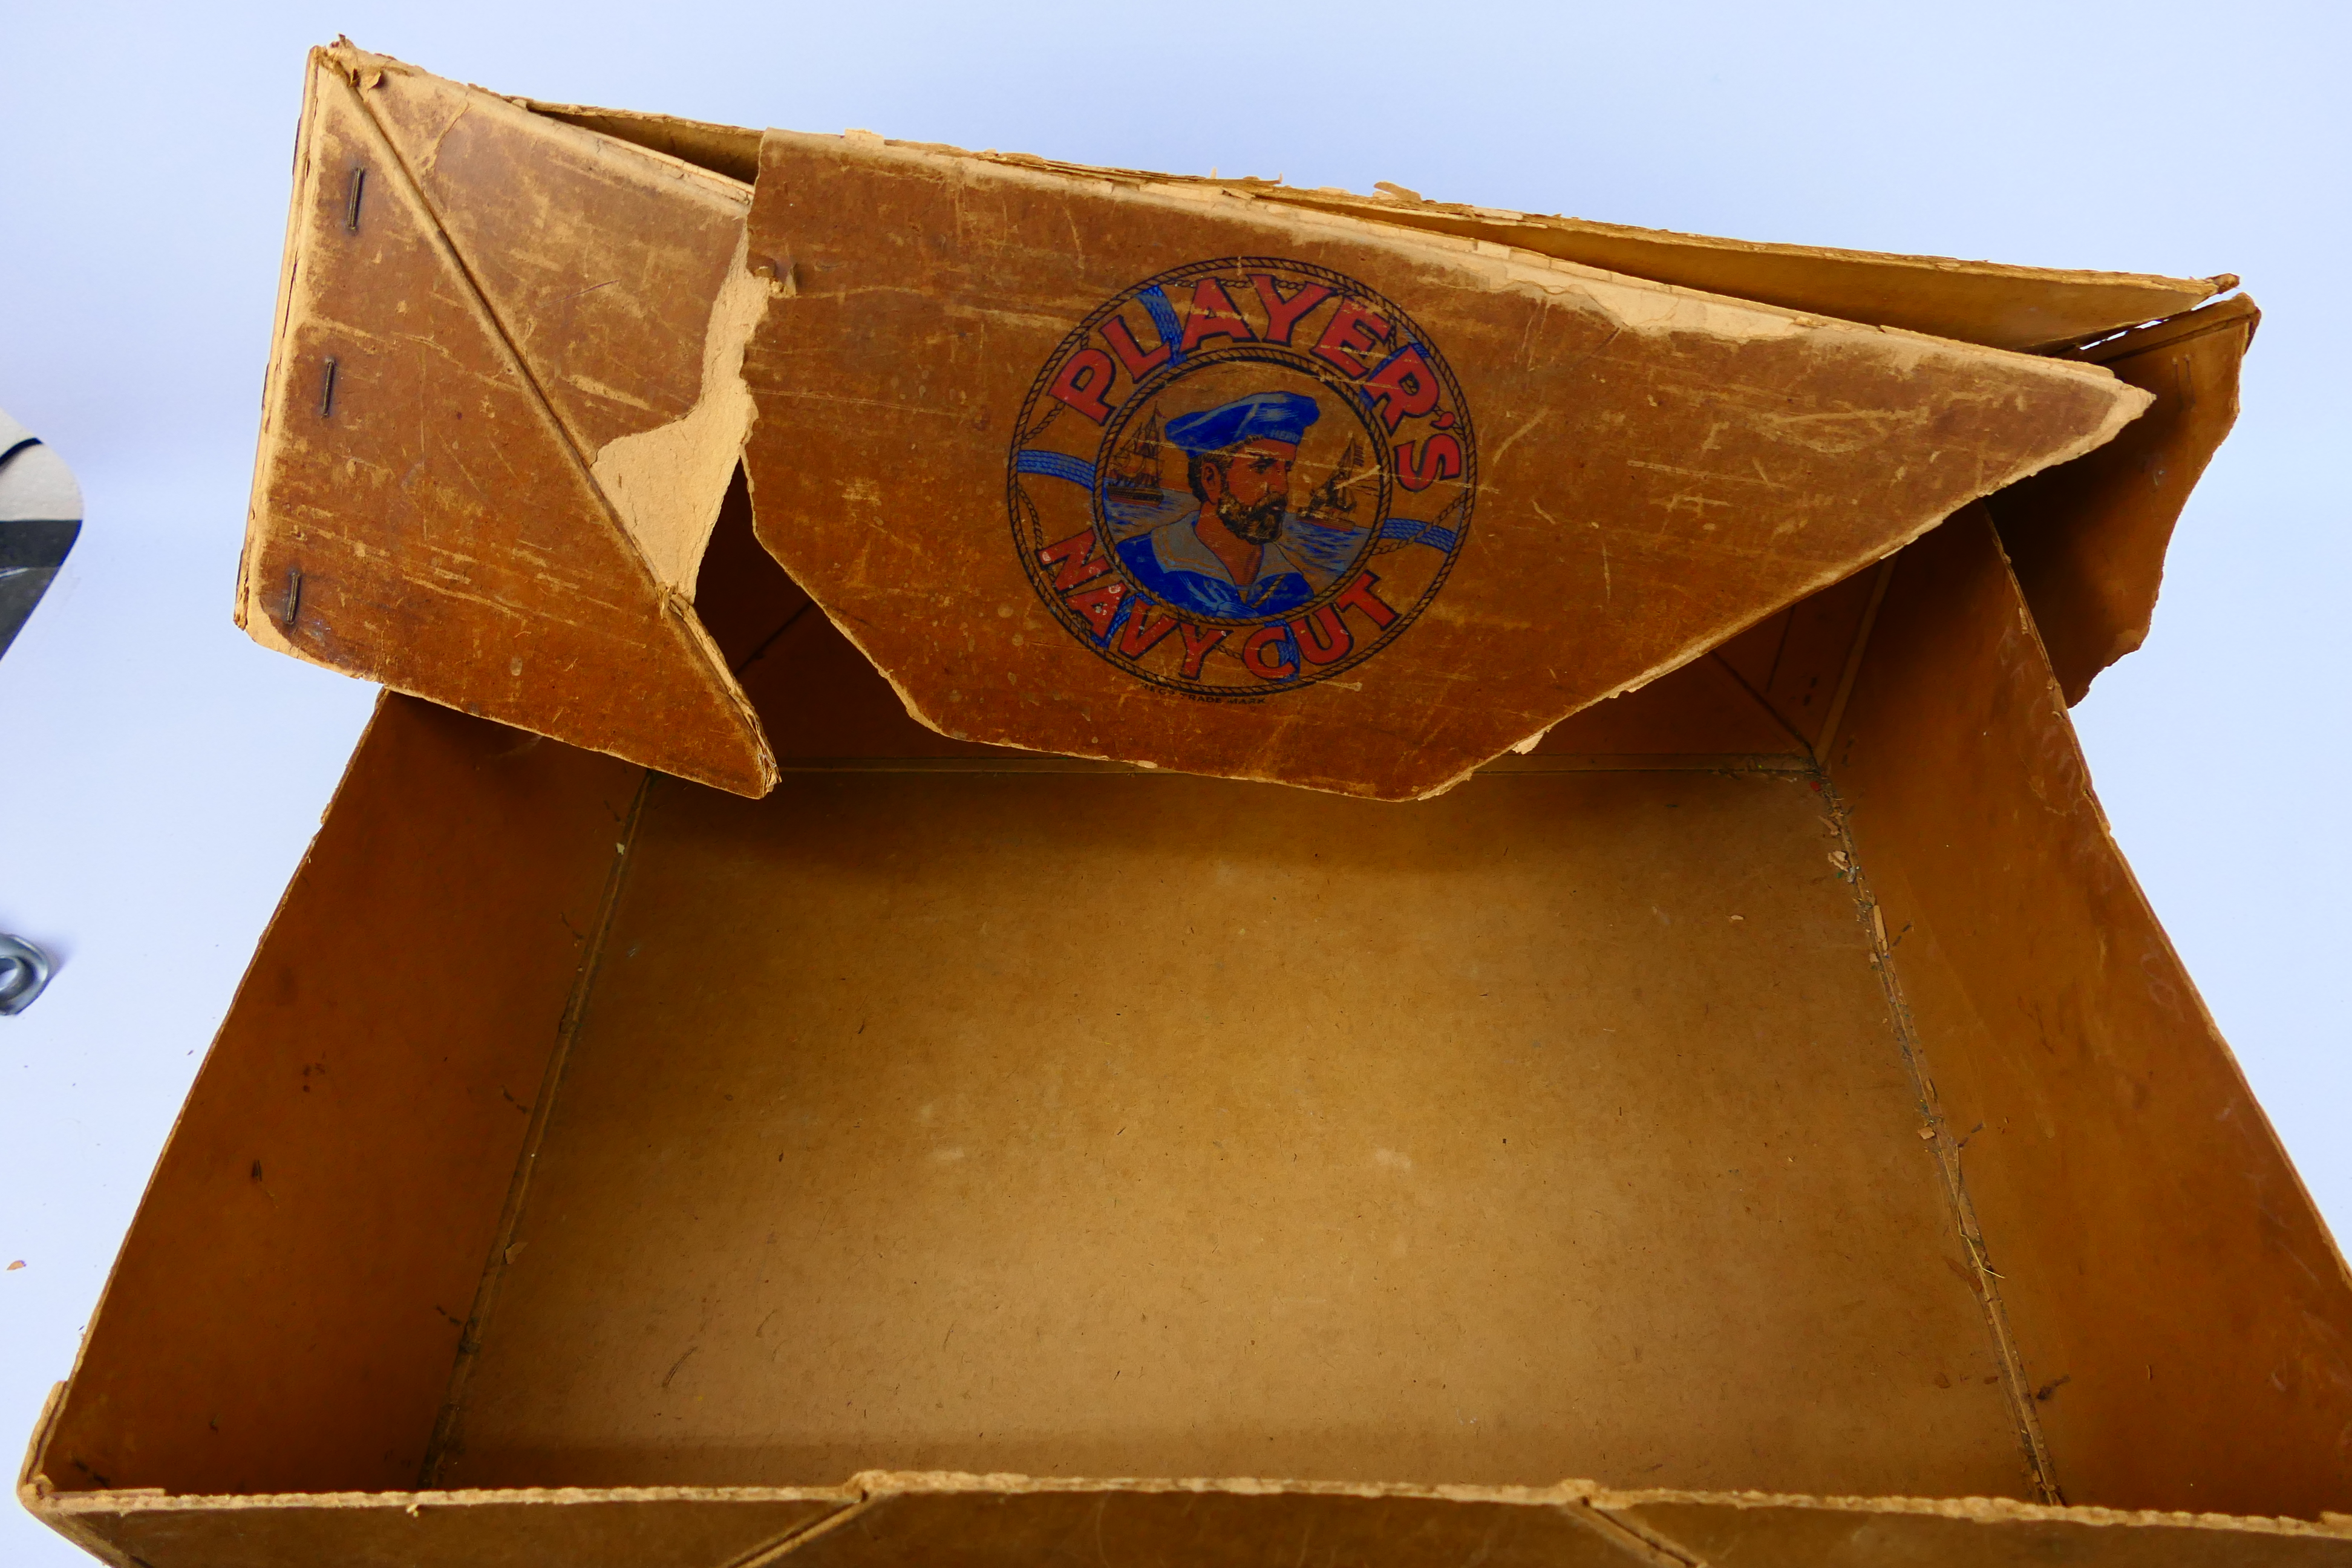 A large size vintage Players Navy cut cigarette retailers box, approximately 57 cm x 42 cm x 20 cm. - Image 6 of 6